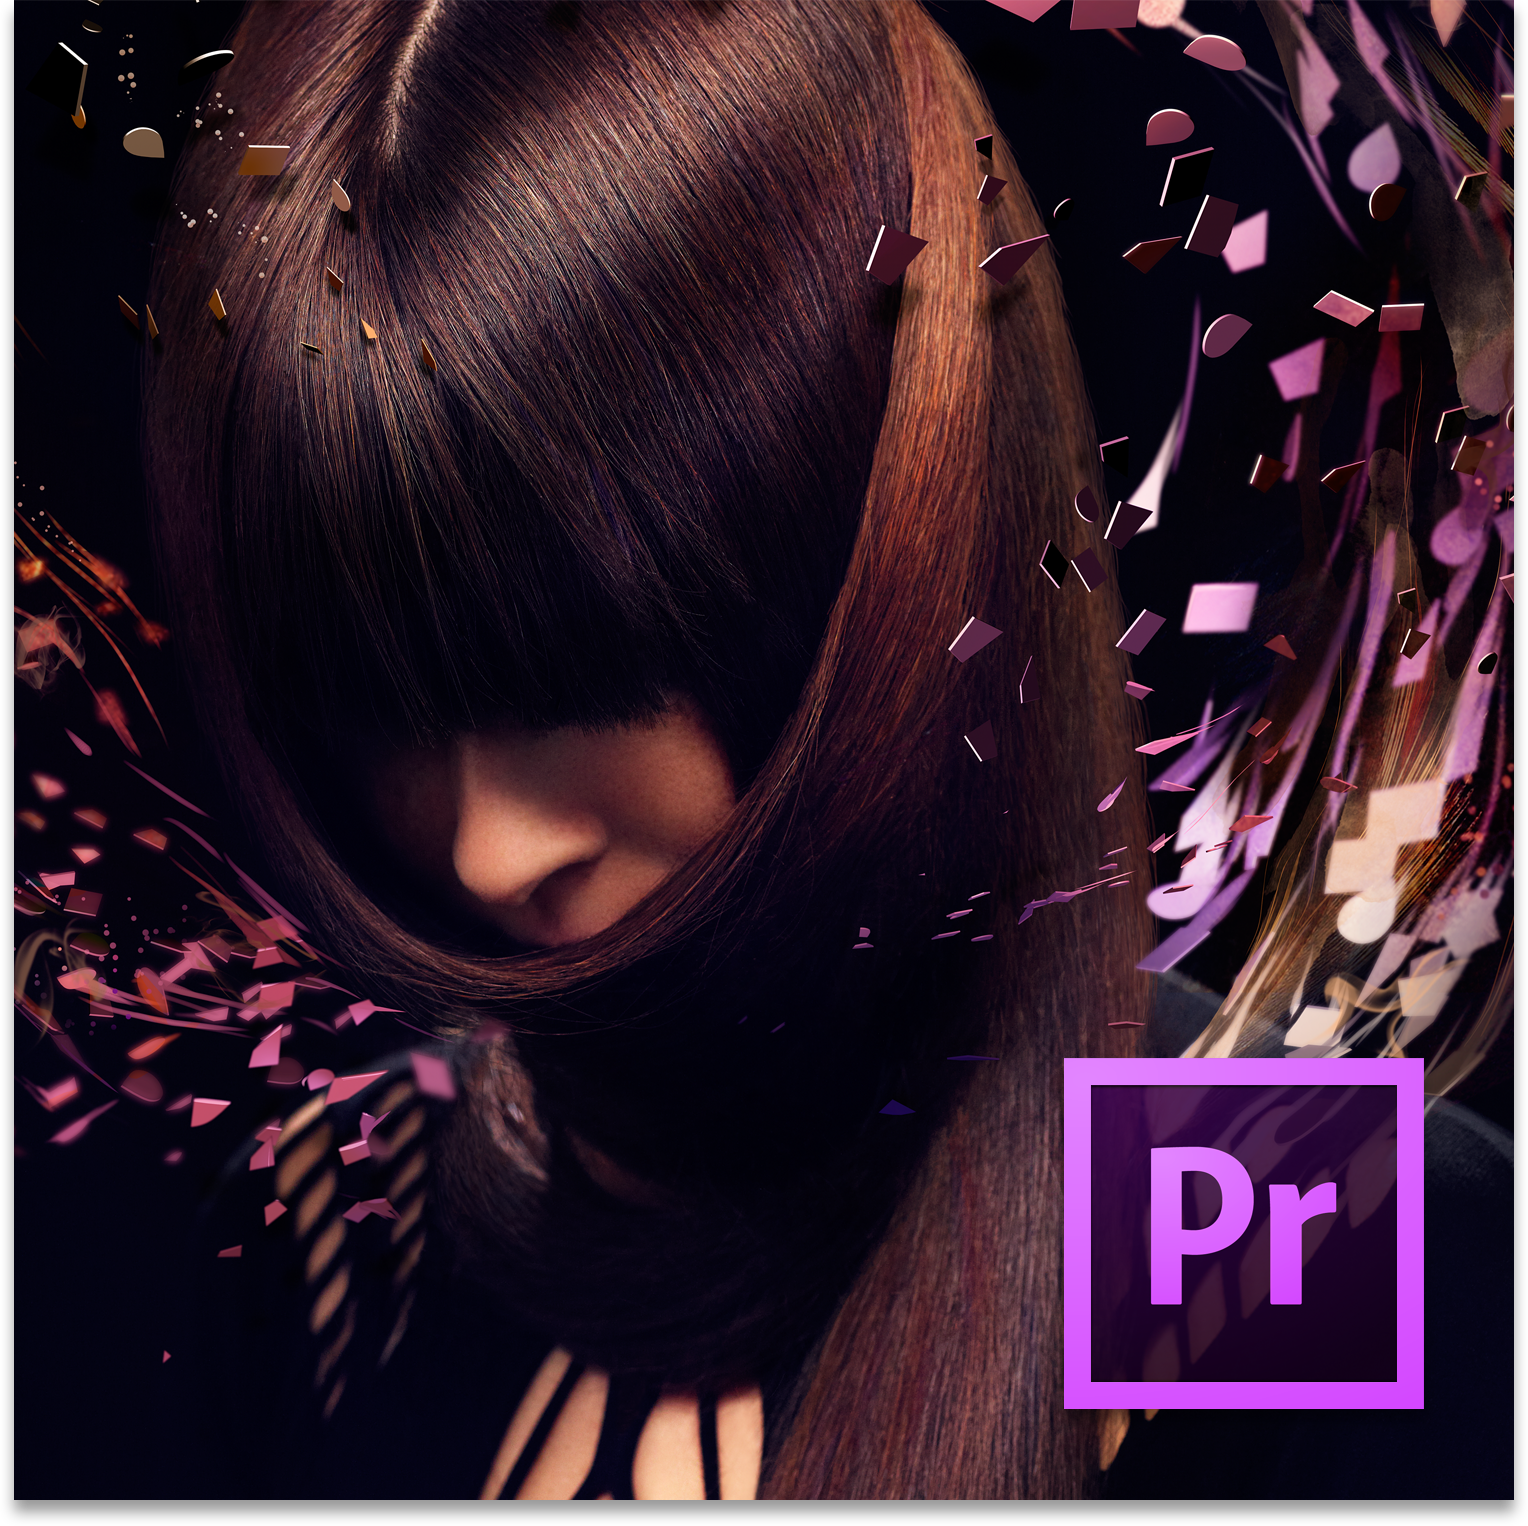 Adobe premiere cs6 download trial